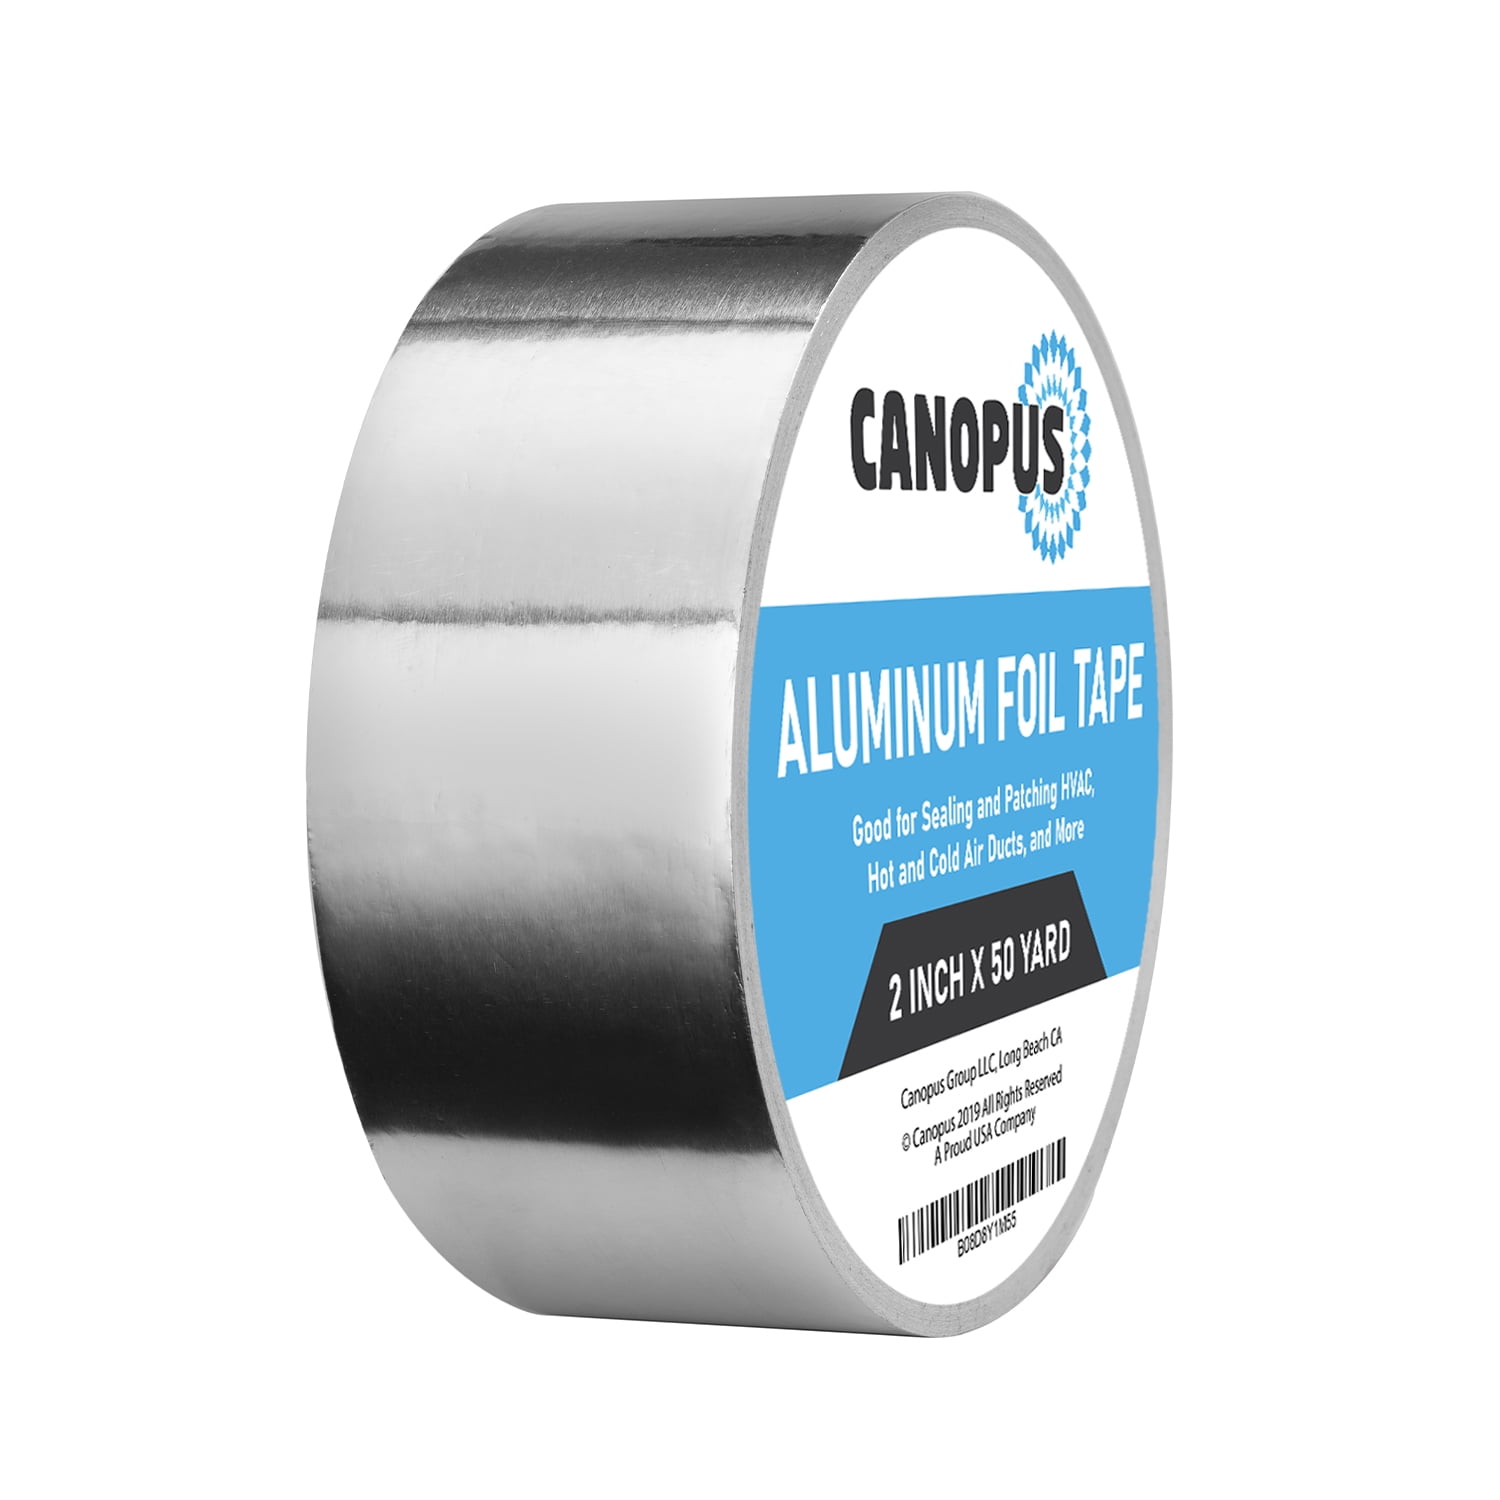 2" x 50 yard foil tape HVAC Aluminum tape 150' feet Duct sealing adhesive 